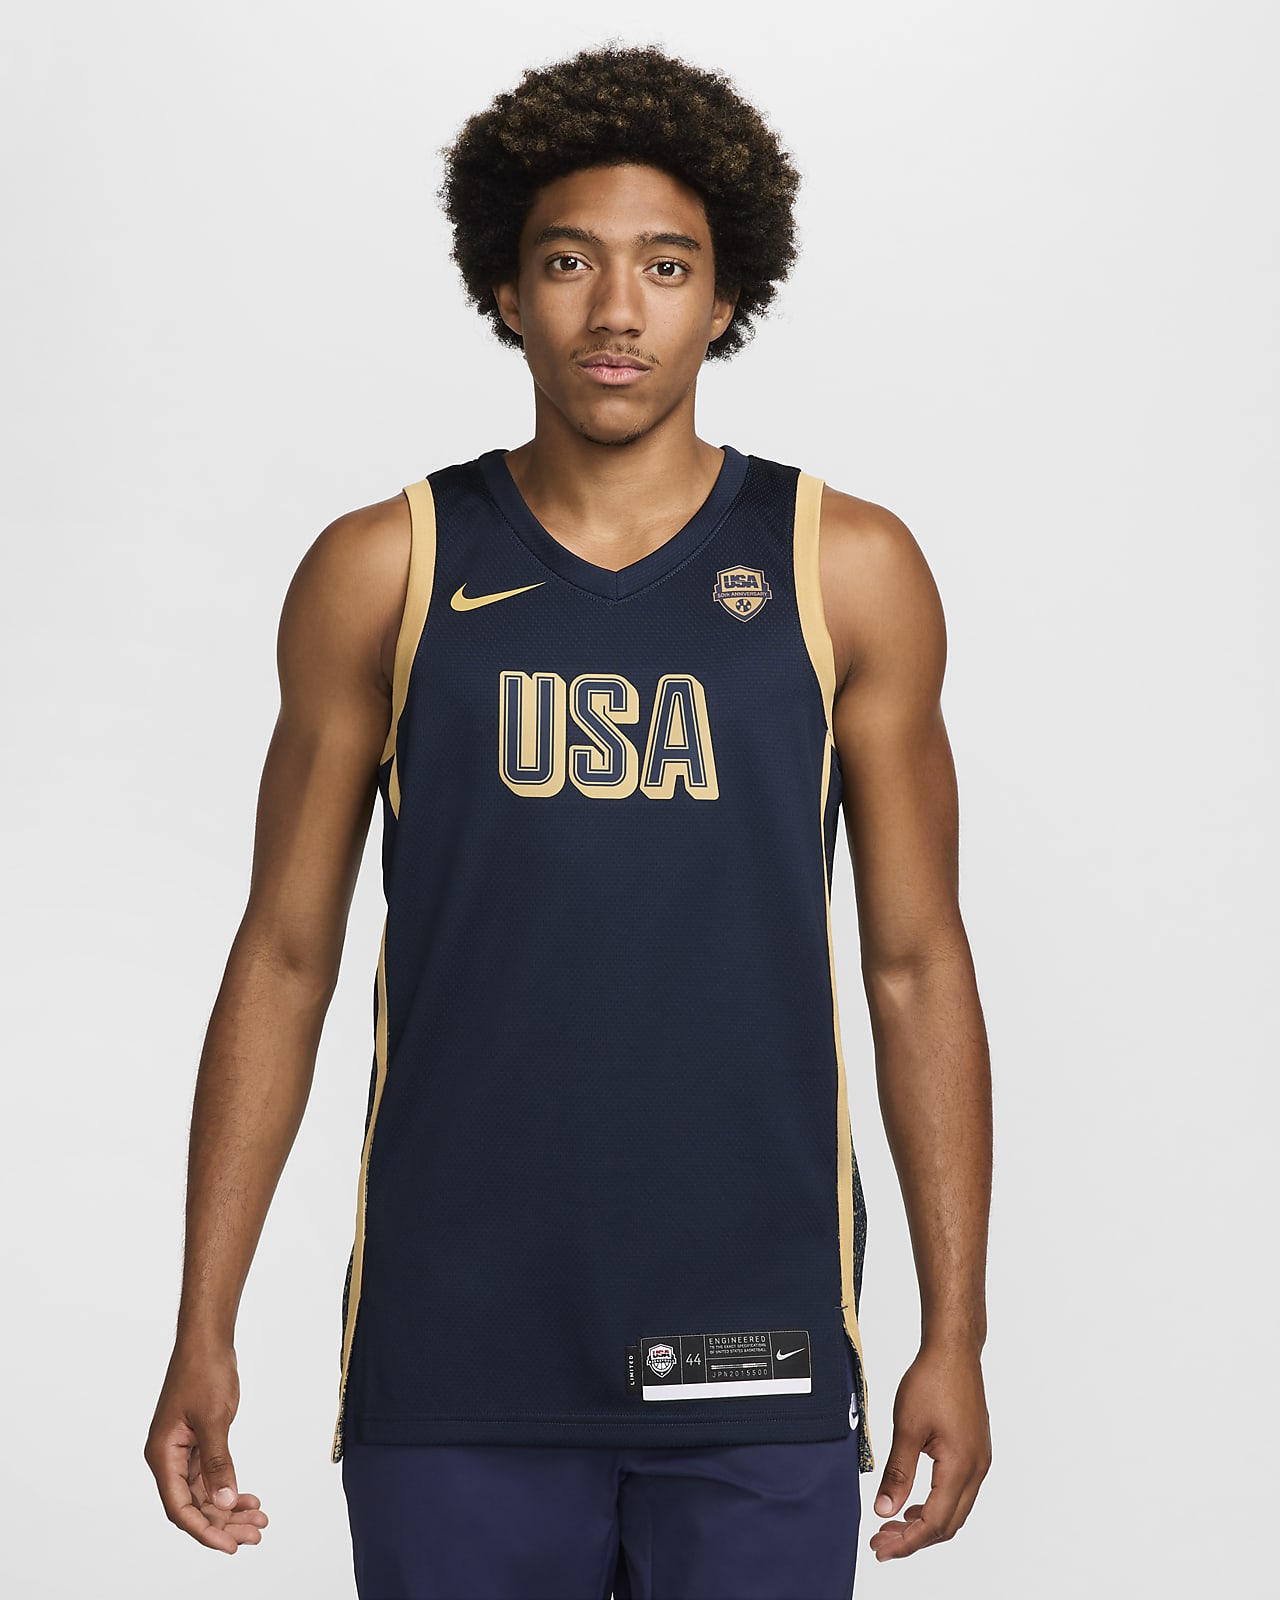 USA Limited Nike basketbaljersey voor heren